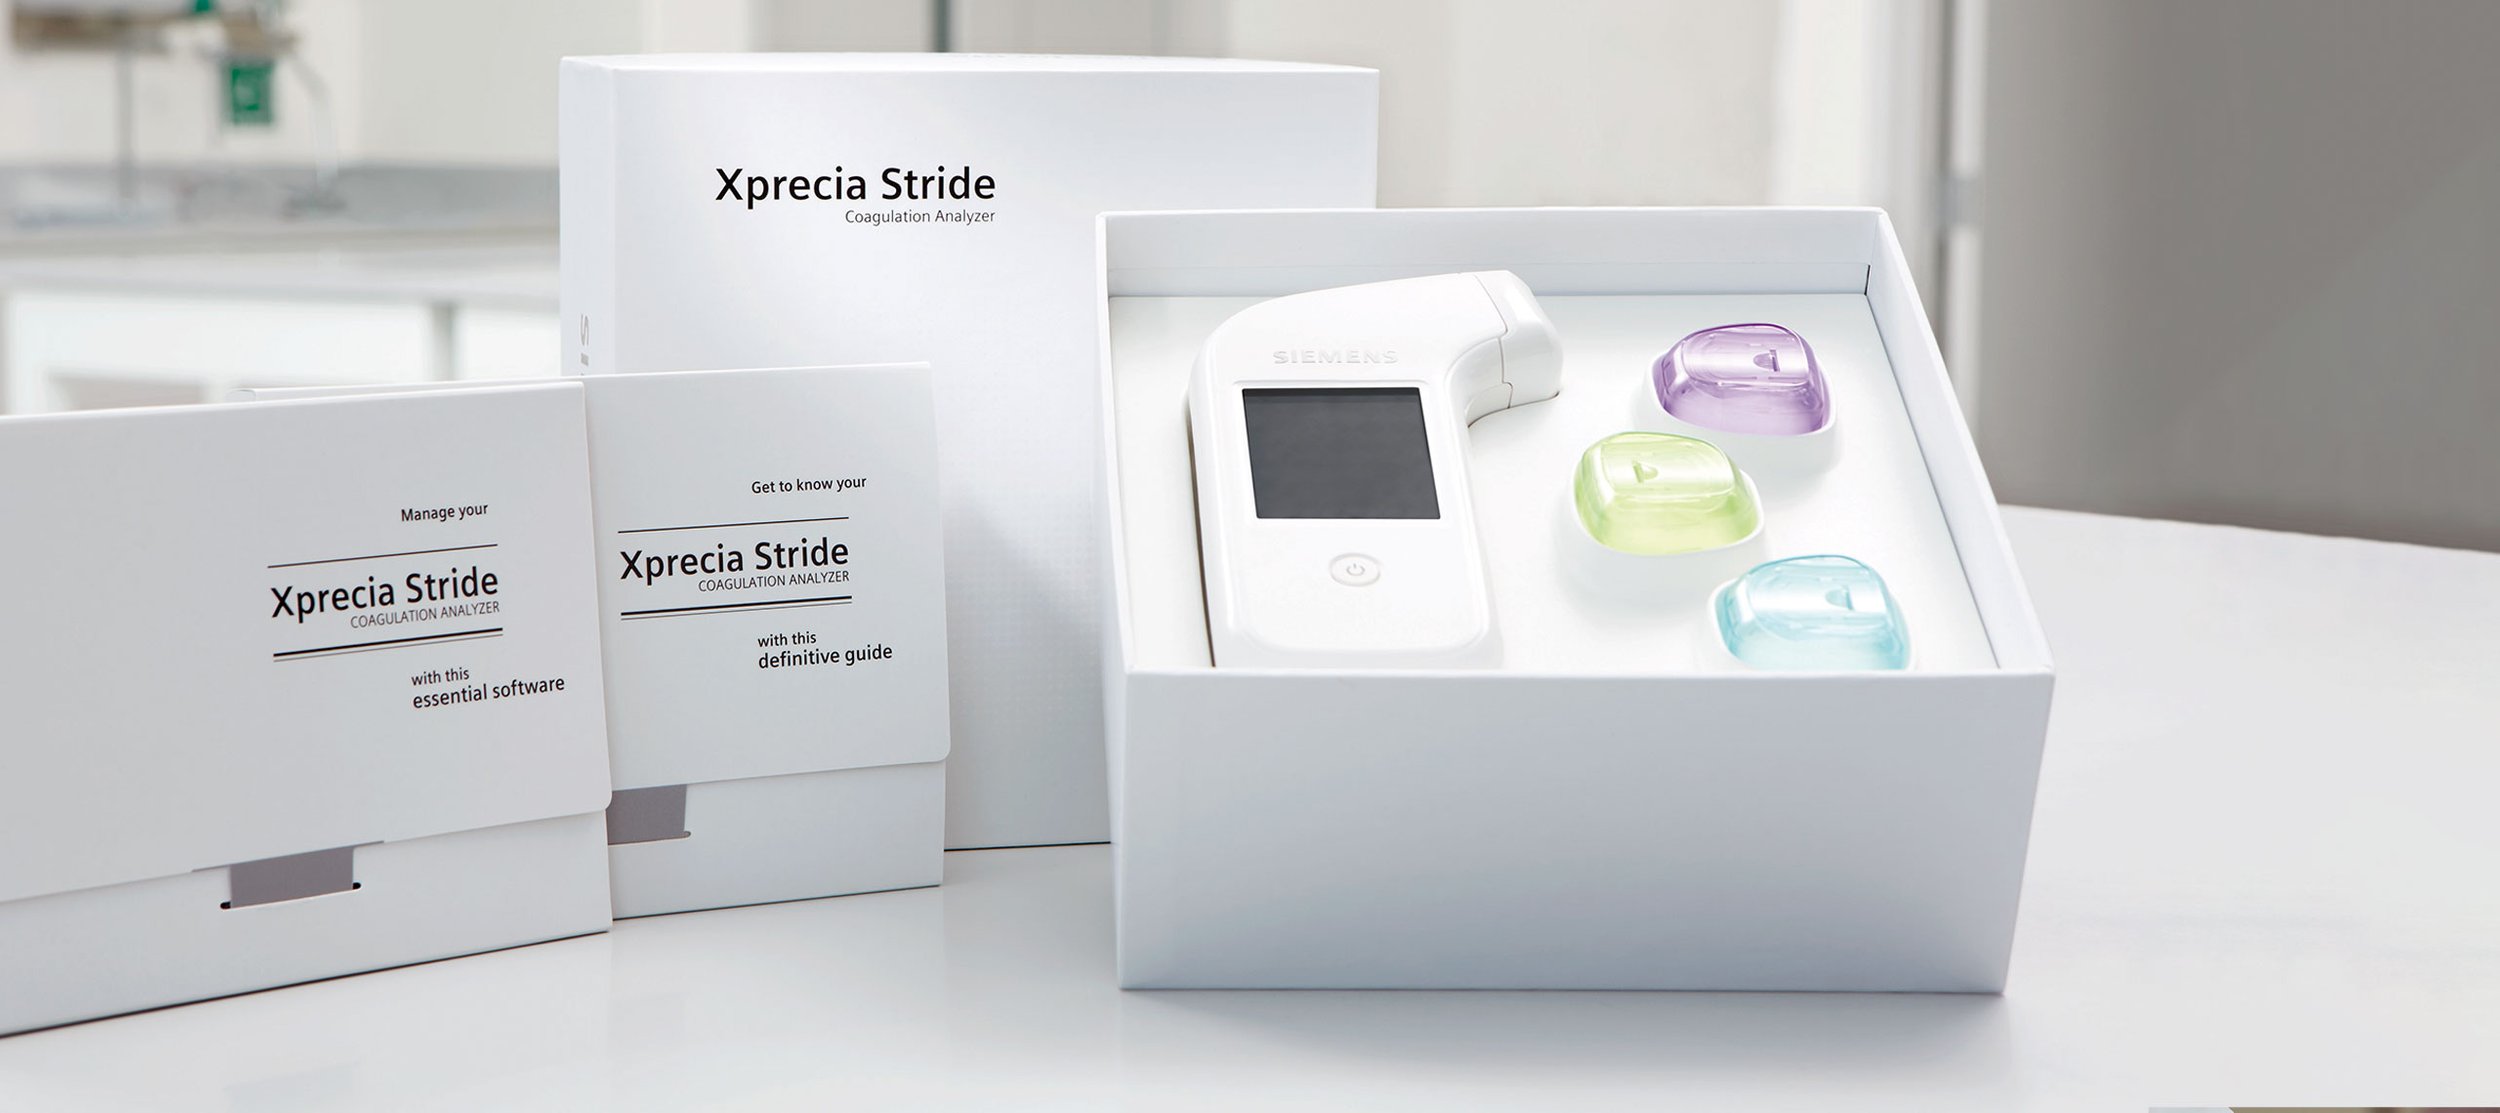 Siemens Xprecia Stride - Medical Device Product Development 5 Packaging.jpg